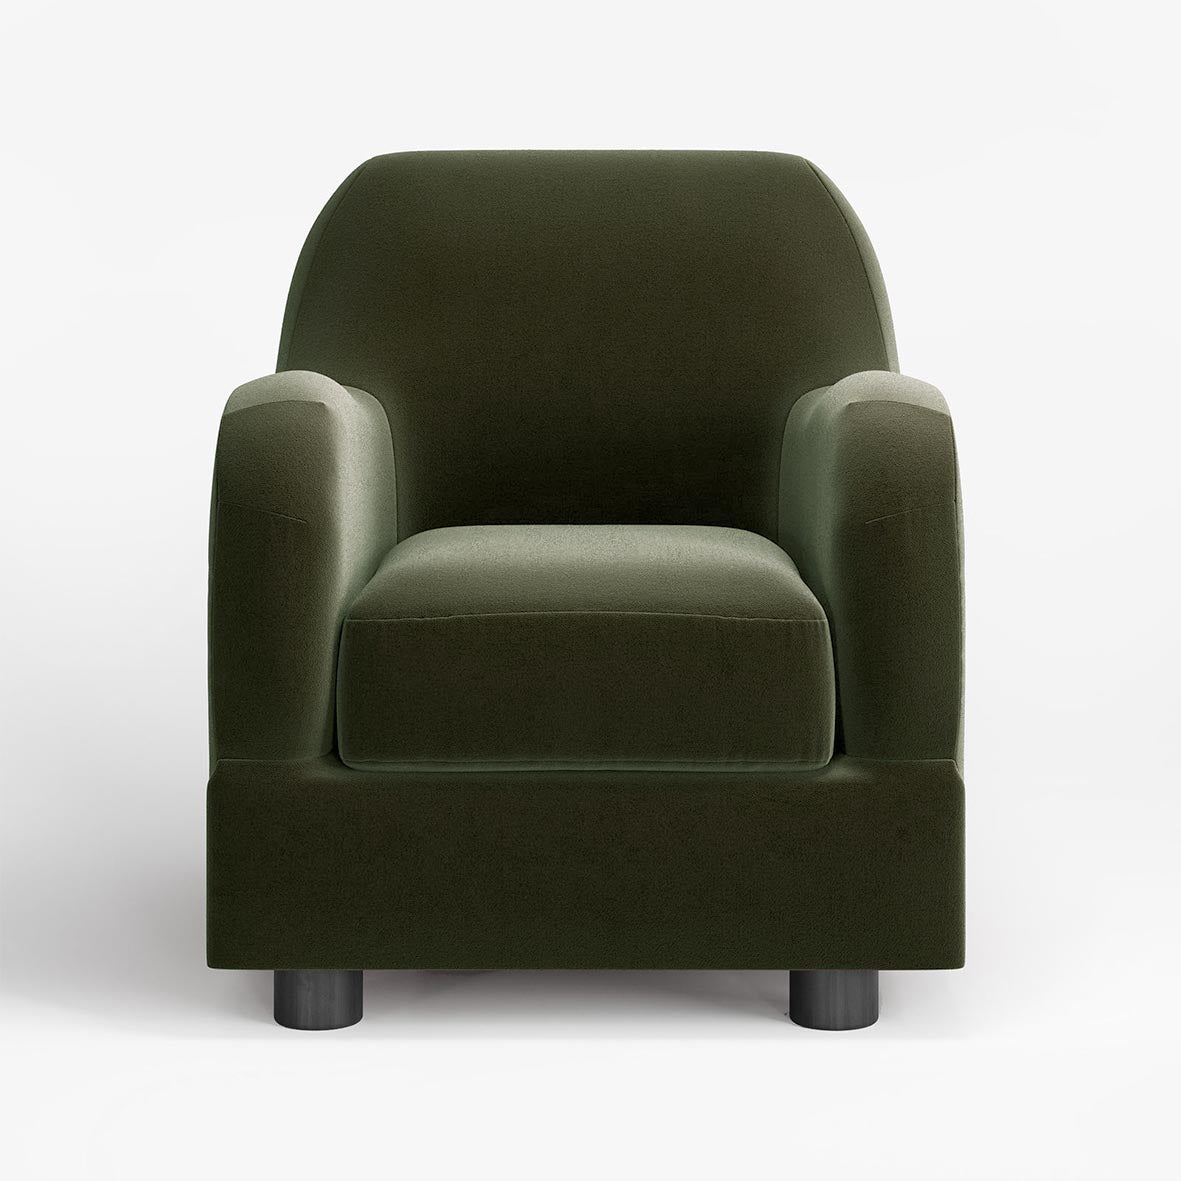 Luxury furniture, Plush Velvet Armchair, Contemporary Design, Modern Design, Made in England